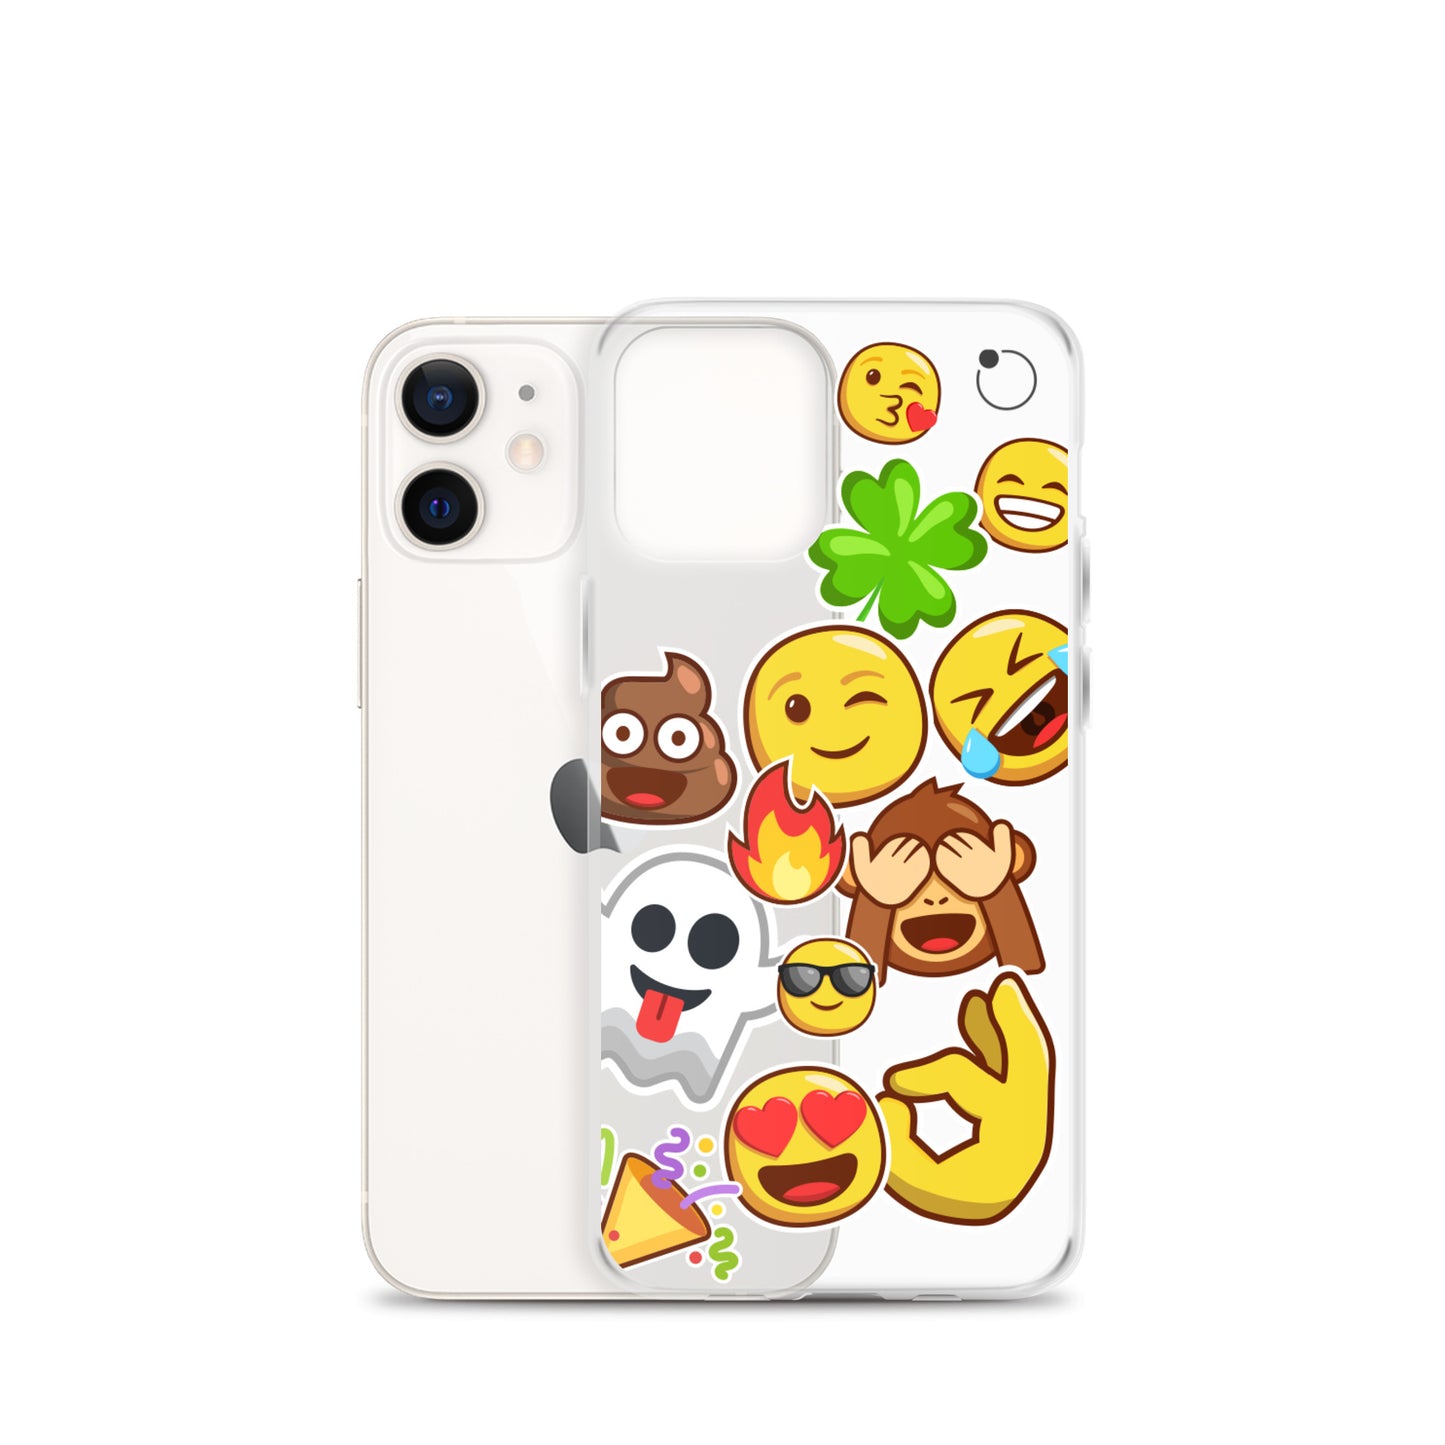 iCase Emoji Standard iPhone Case